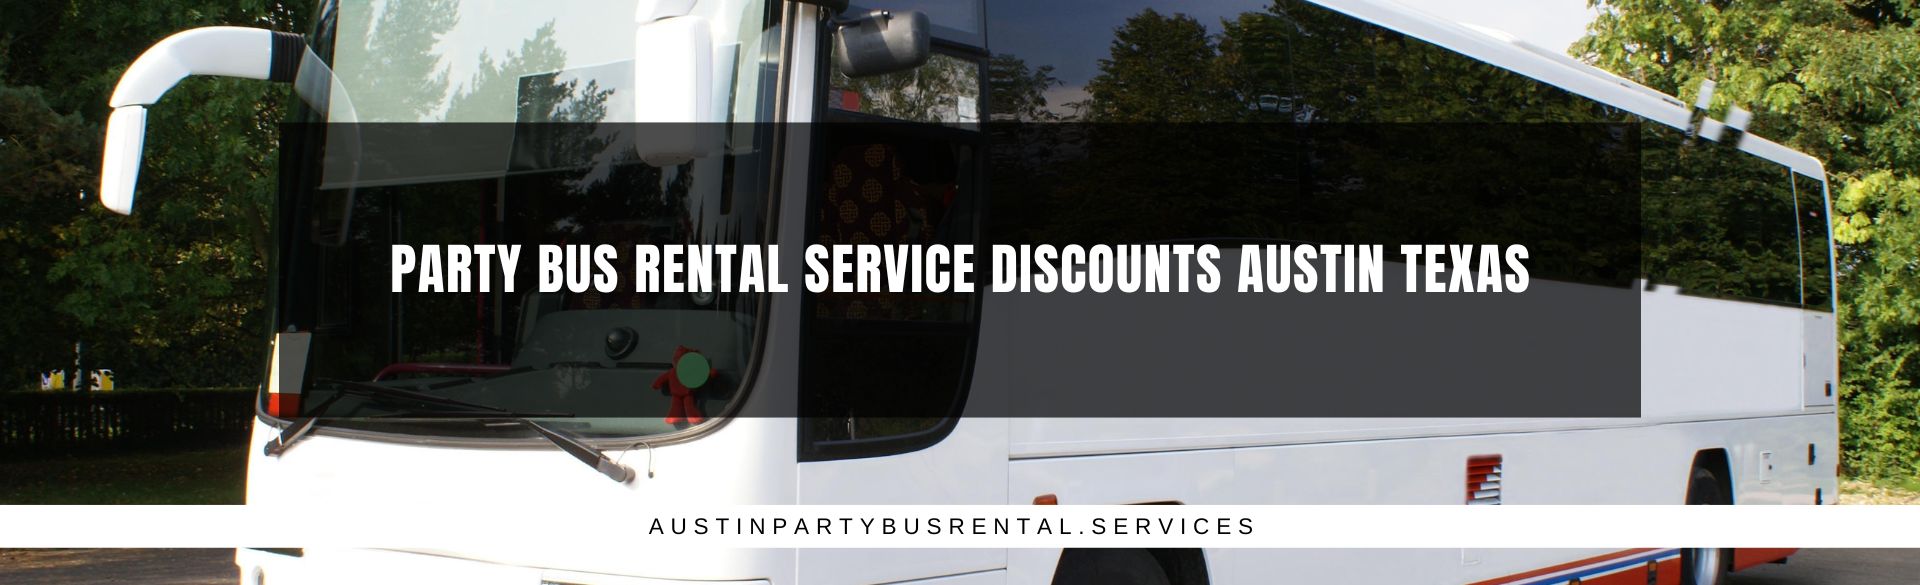 Party Bus Rental Service Discounts Austin Texas